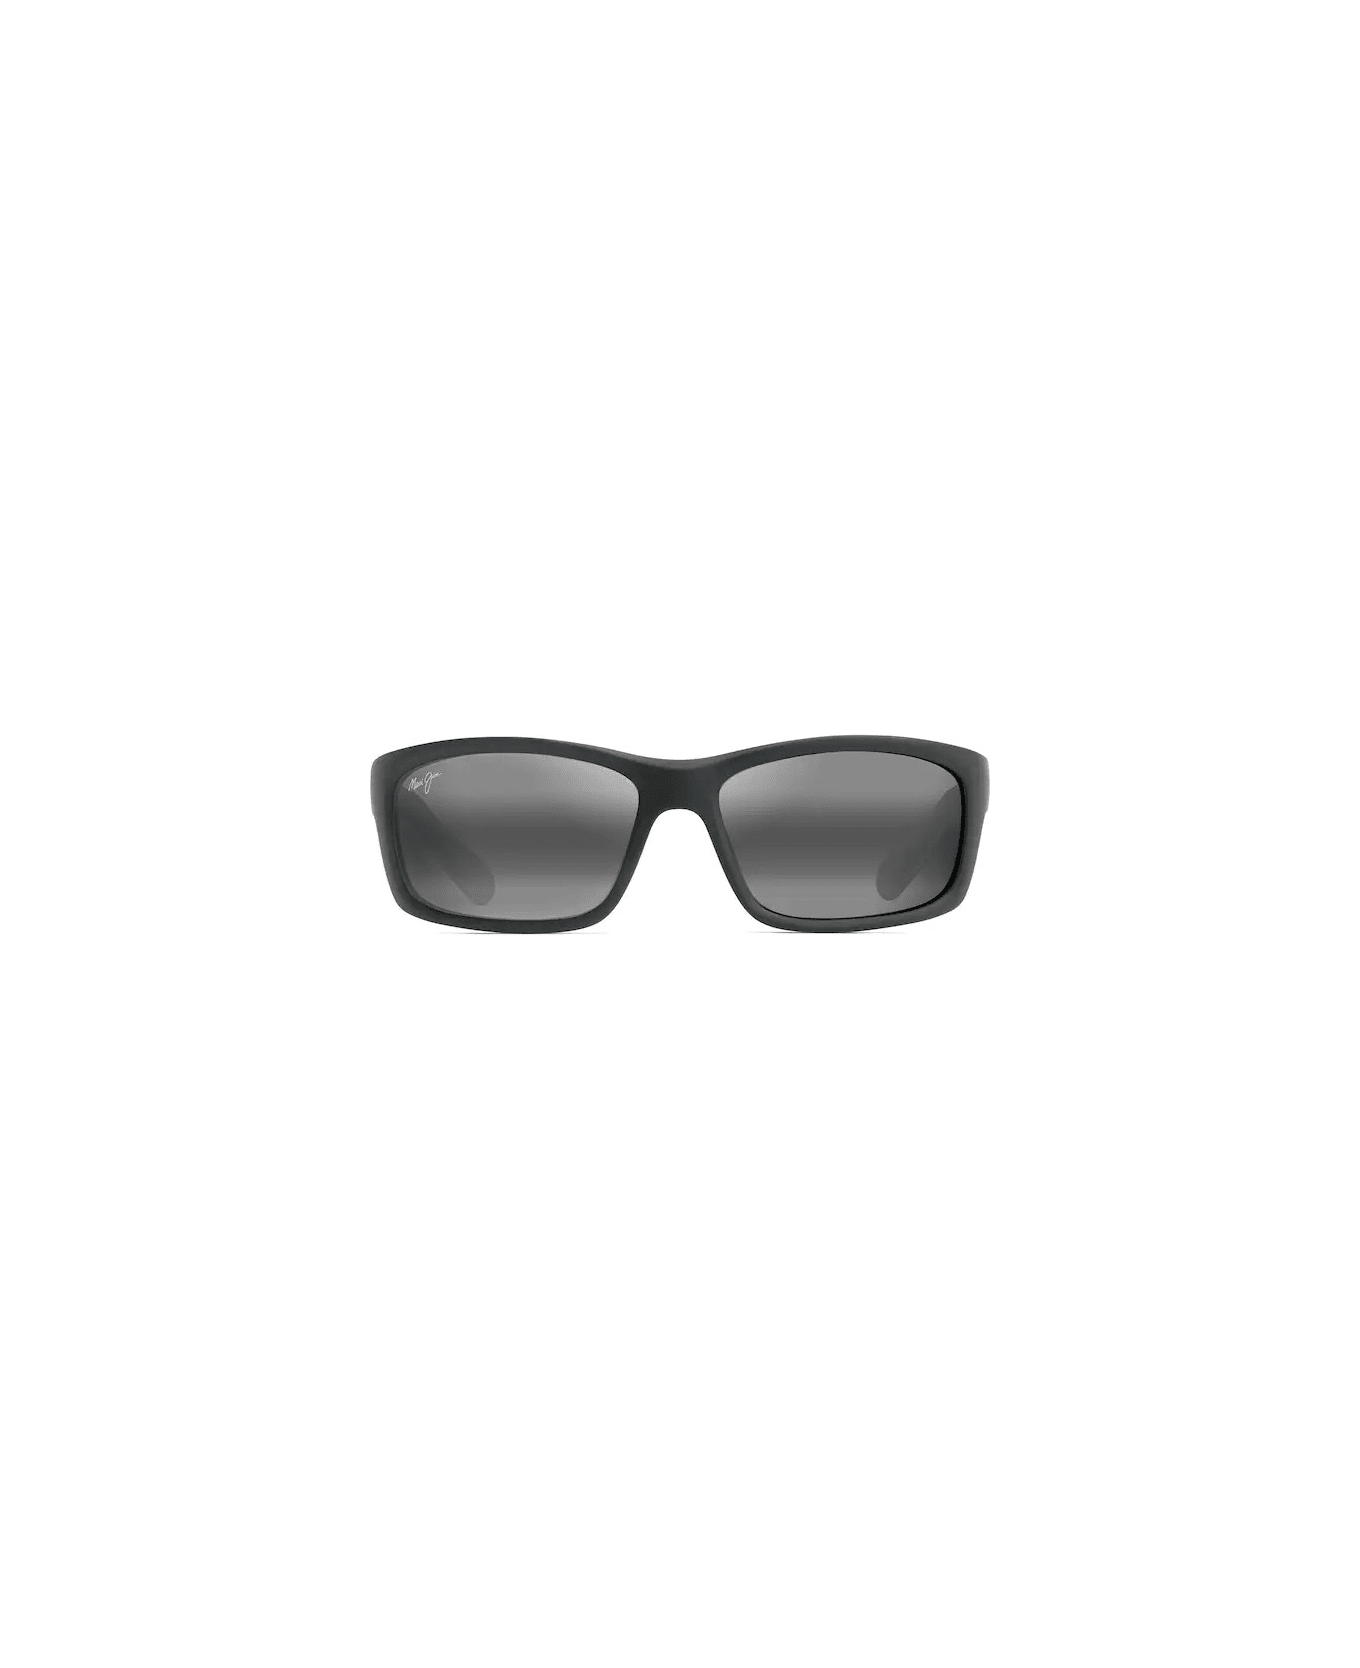 Maui Jim 766-02MD Sunglasses - Black サングラス